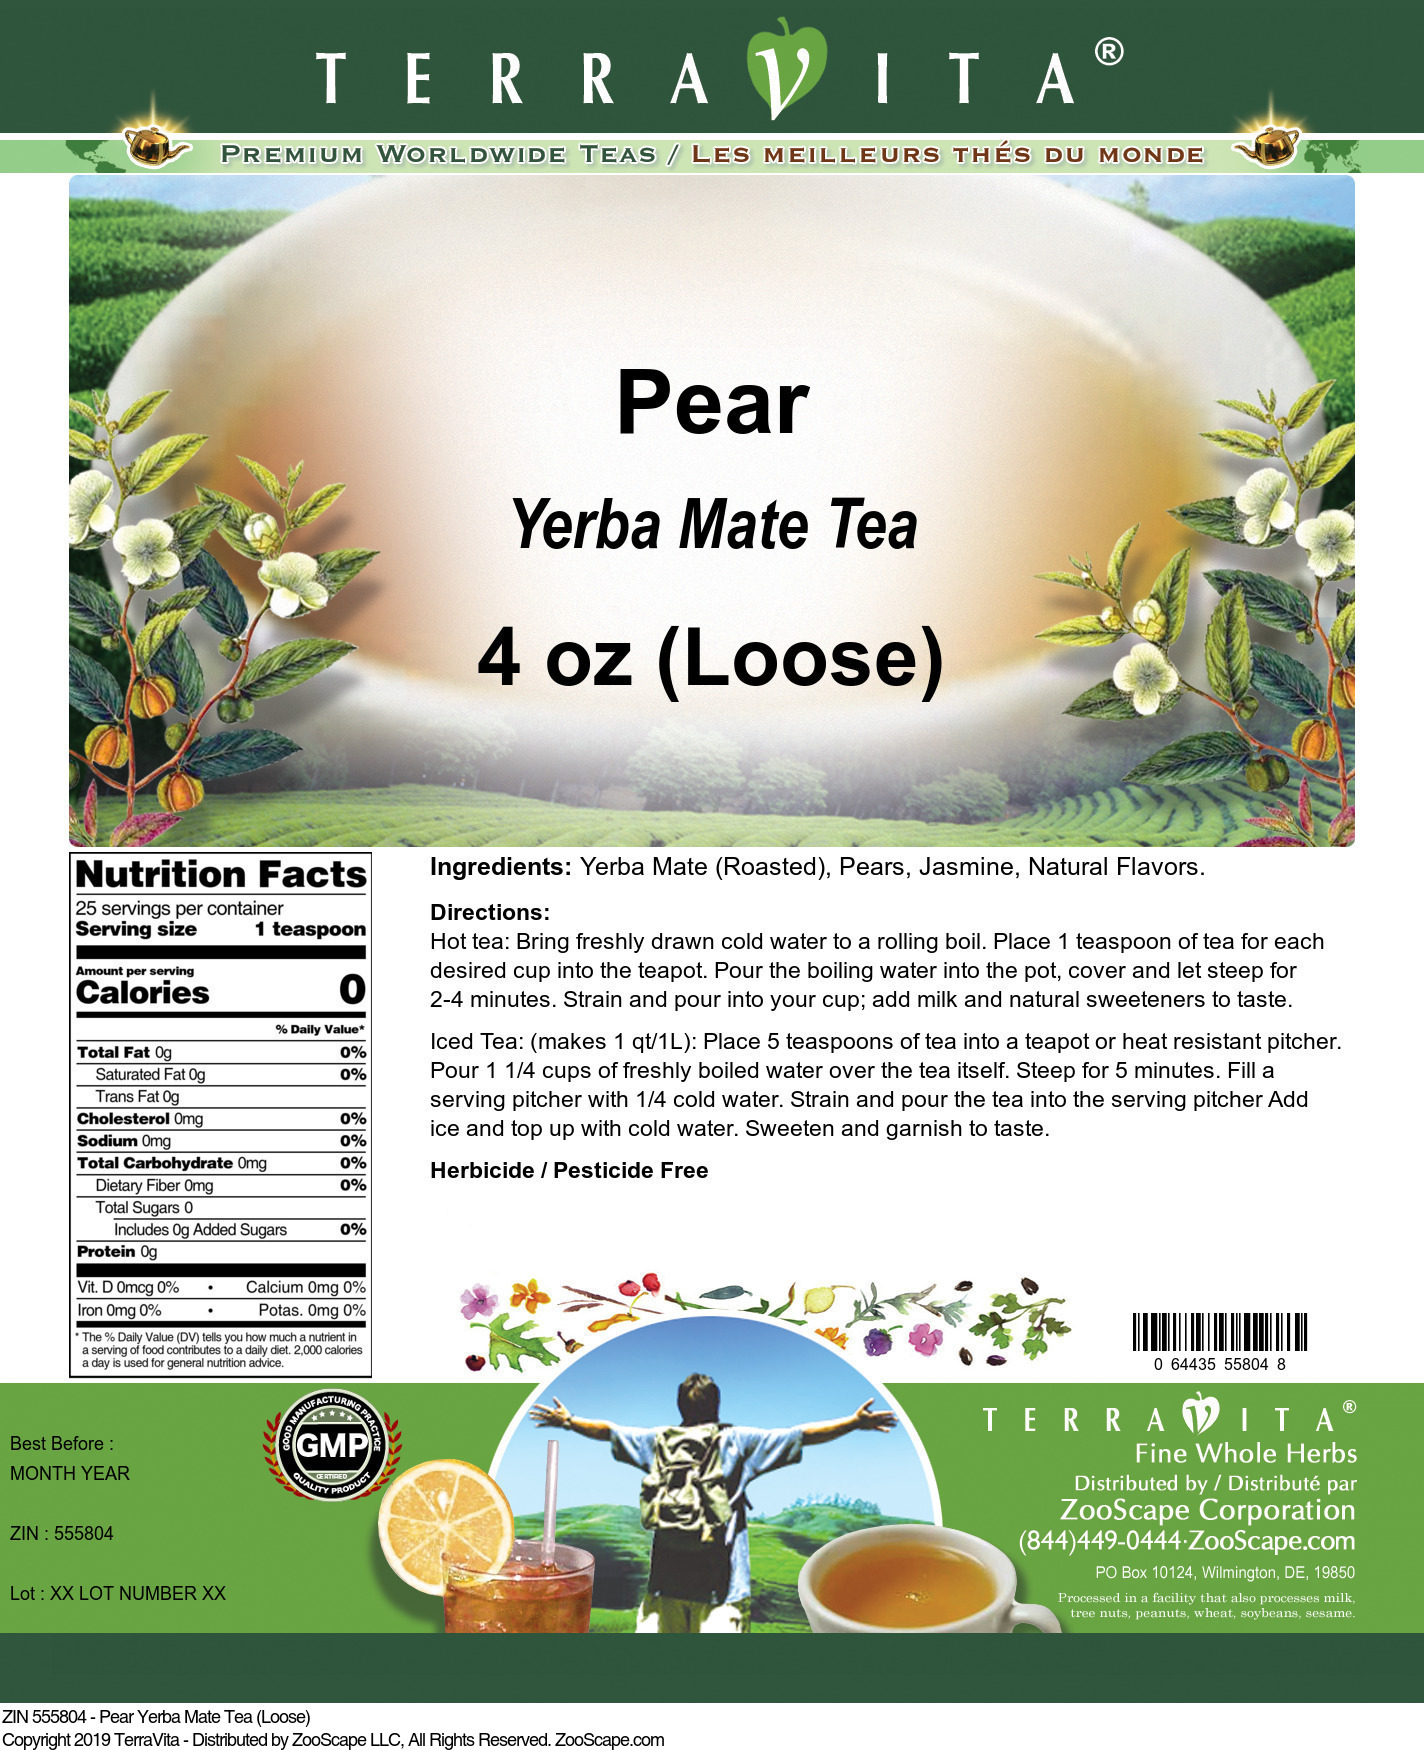 Pear Yerba Mate Tea (Loose) - Label